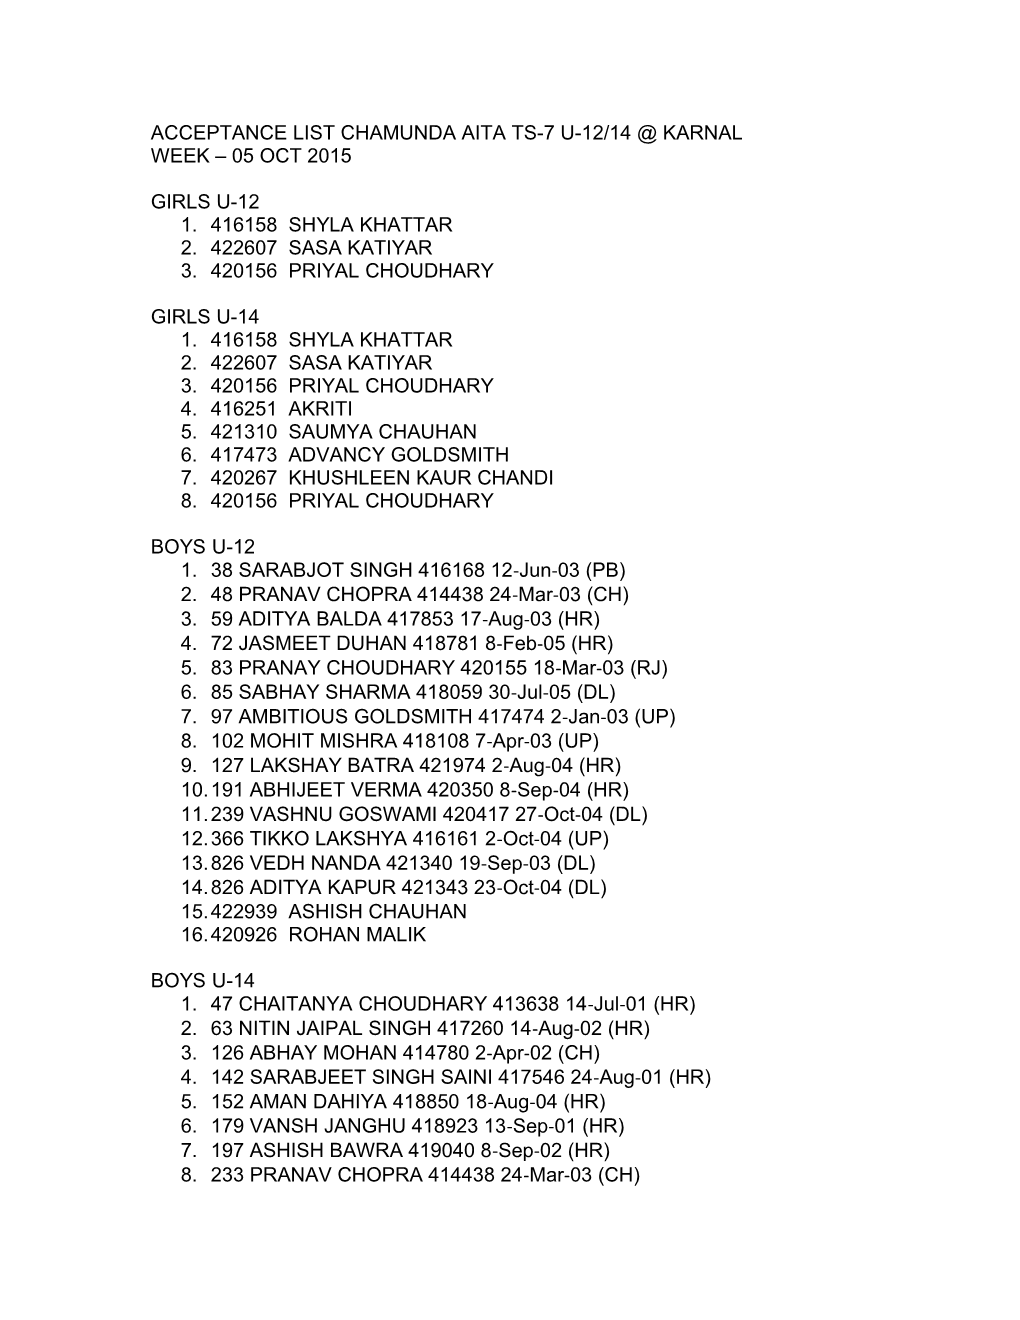 Acceptance List Chamunda Aita Ts-7 U-12/14 Karnal